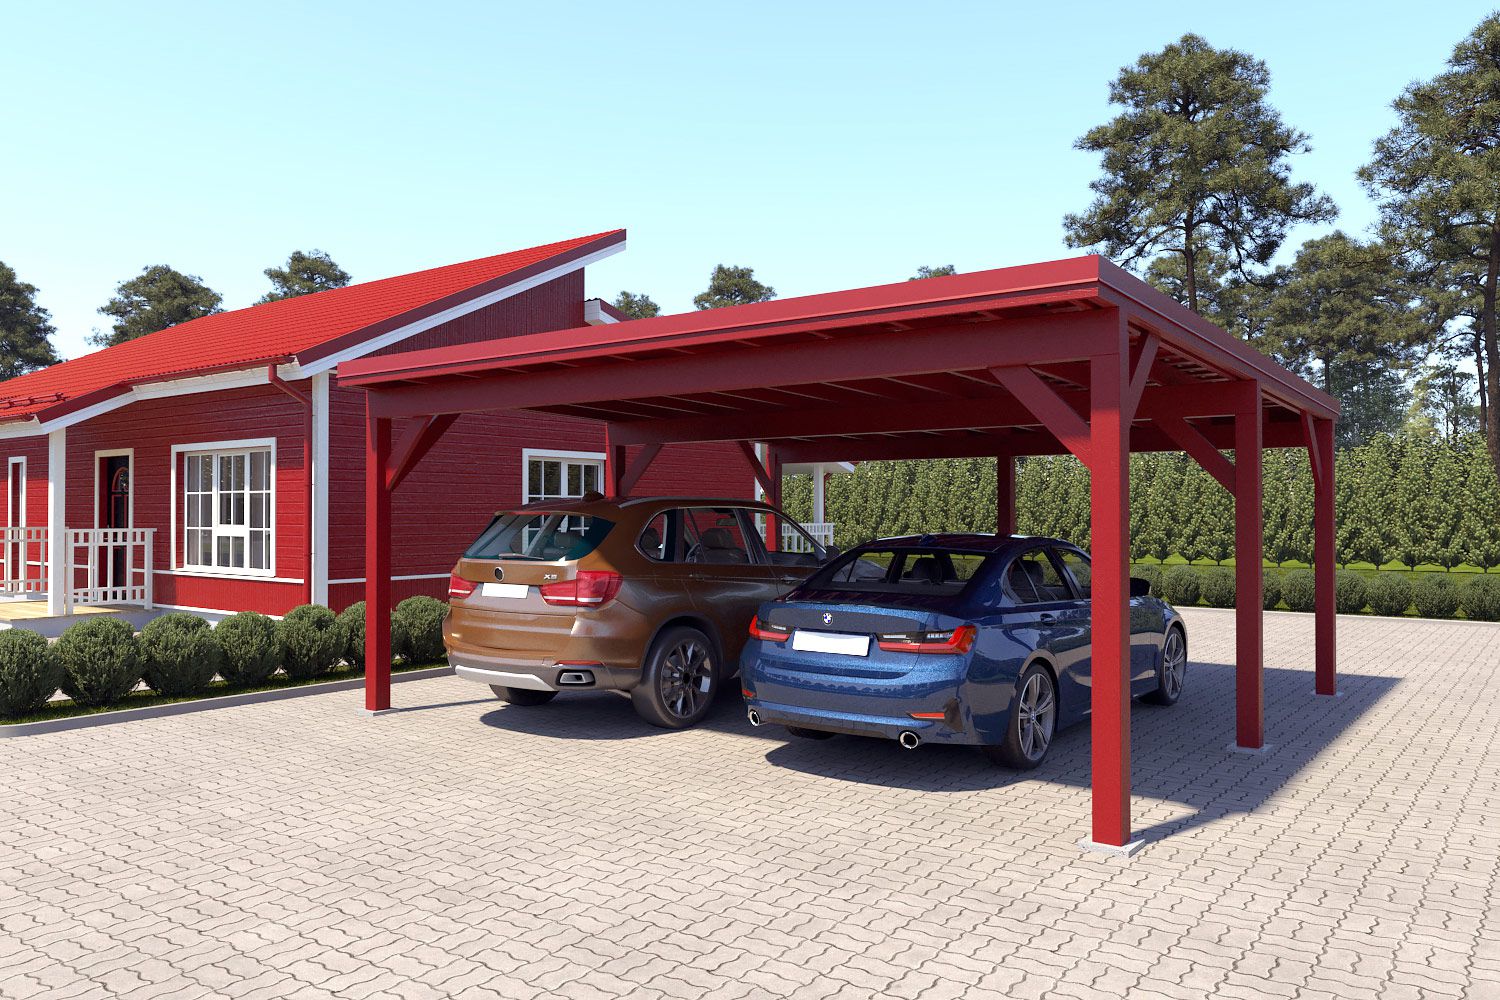 Dubbele carport "Stable" 6 x 6 m (LxB) / 250 kg/m² dak belasting / 36 m² / oxide rood met rood dak